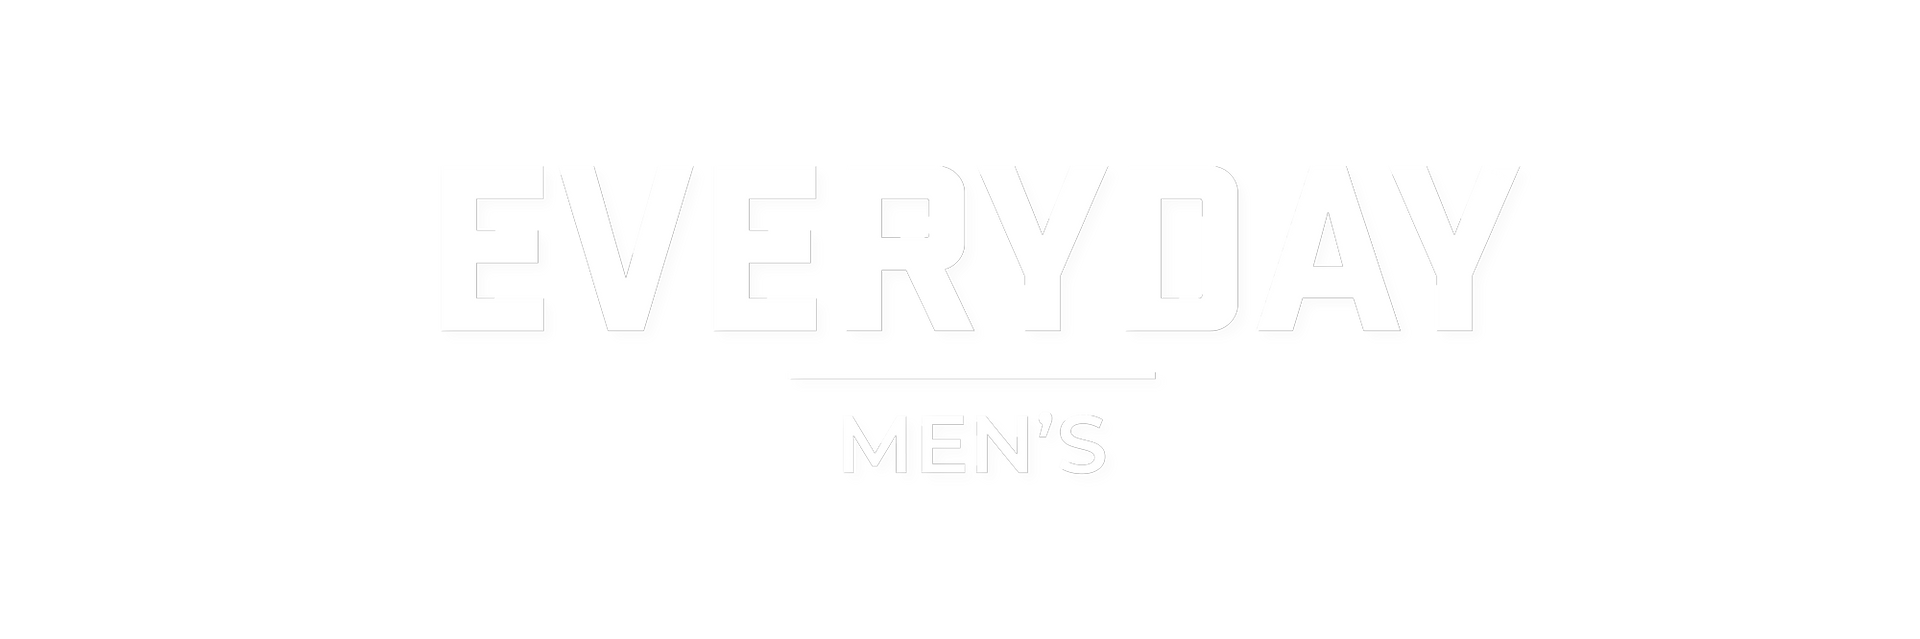 Men's Everyday  Header Image Text Overlay